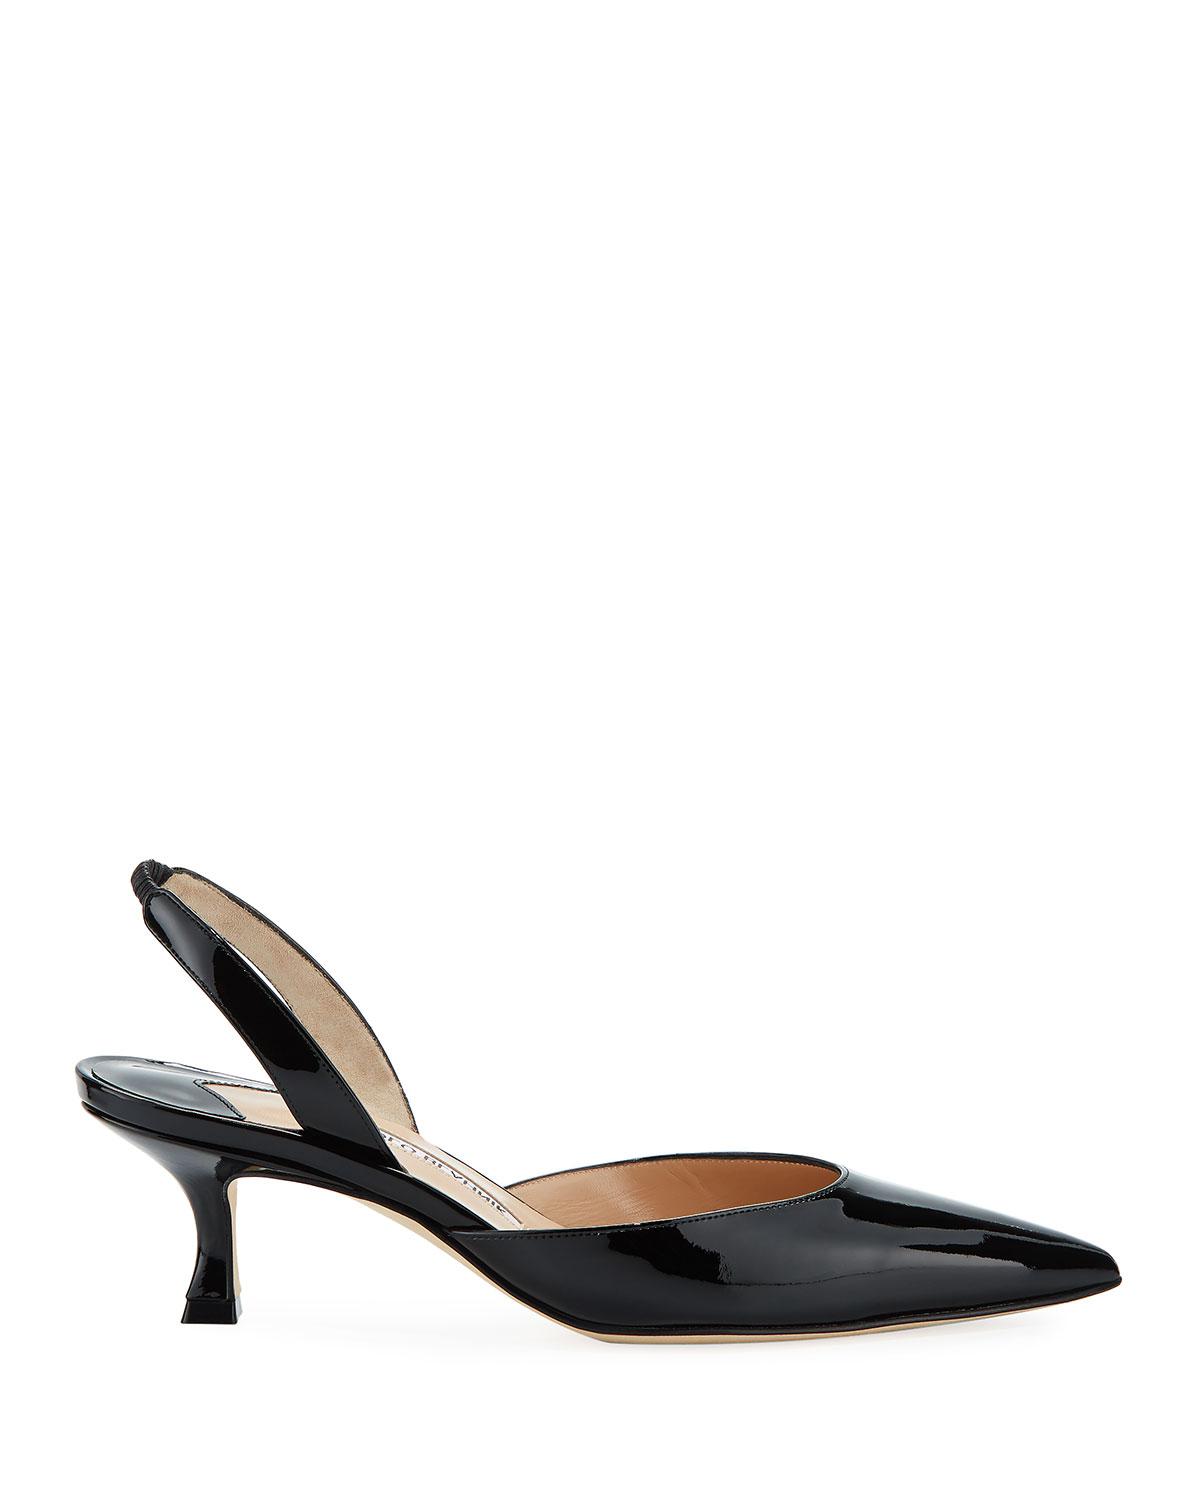 Manolo Blahnik Leather Carolyne Low-heel Patent Halter Pumps in Black ...